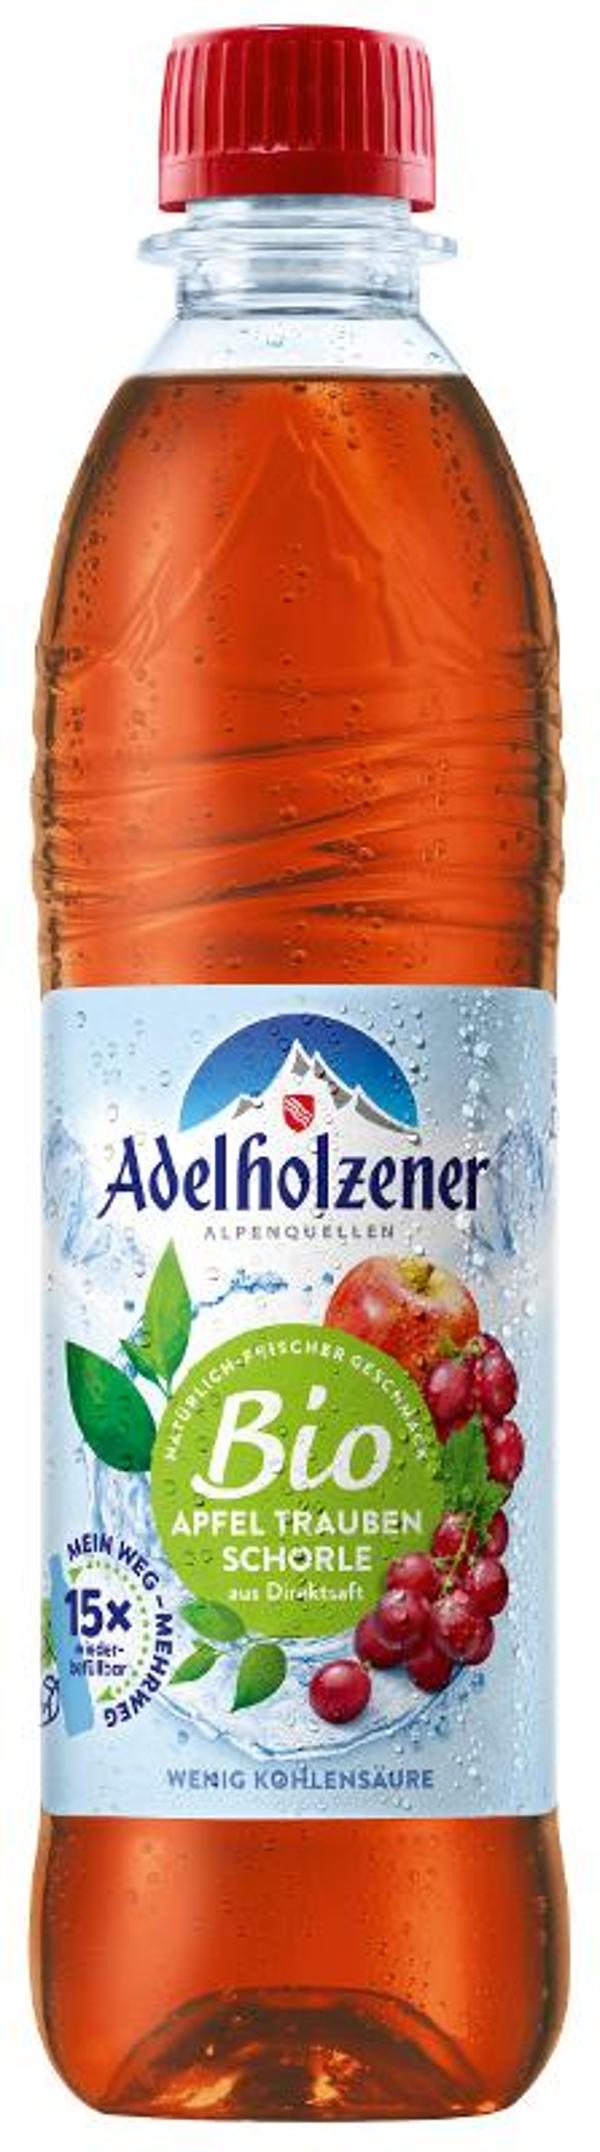 Produktfoto zu Adelholzener Apfel Trauben Schorle